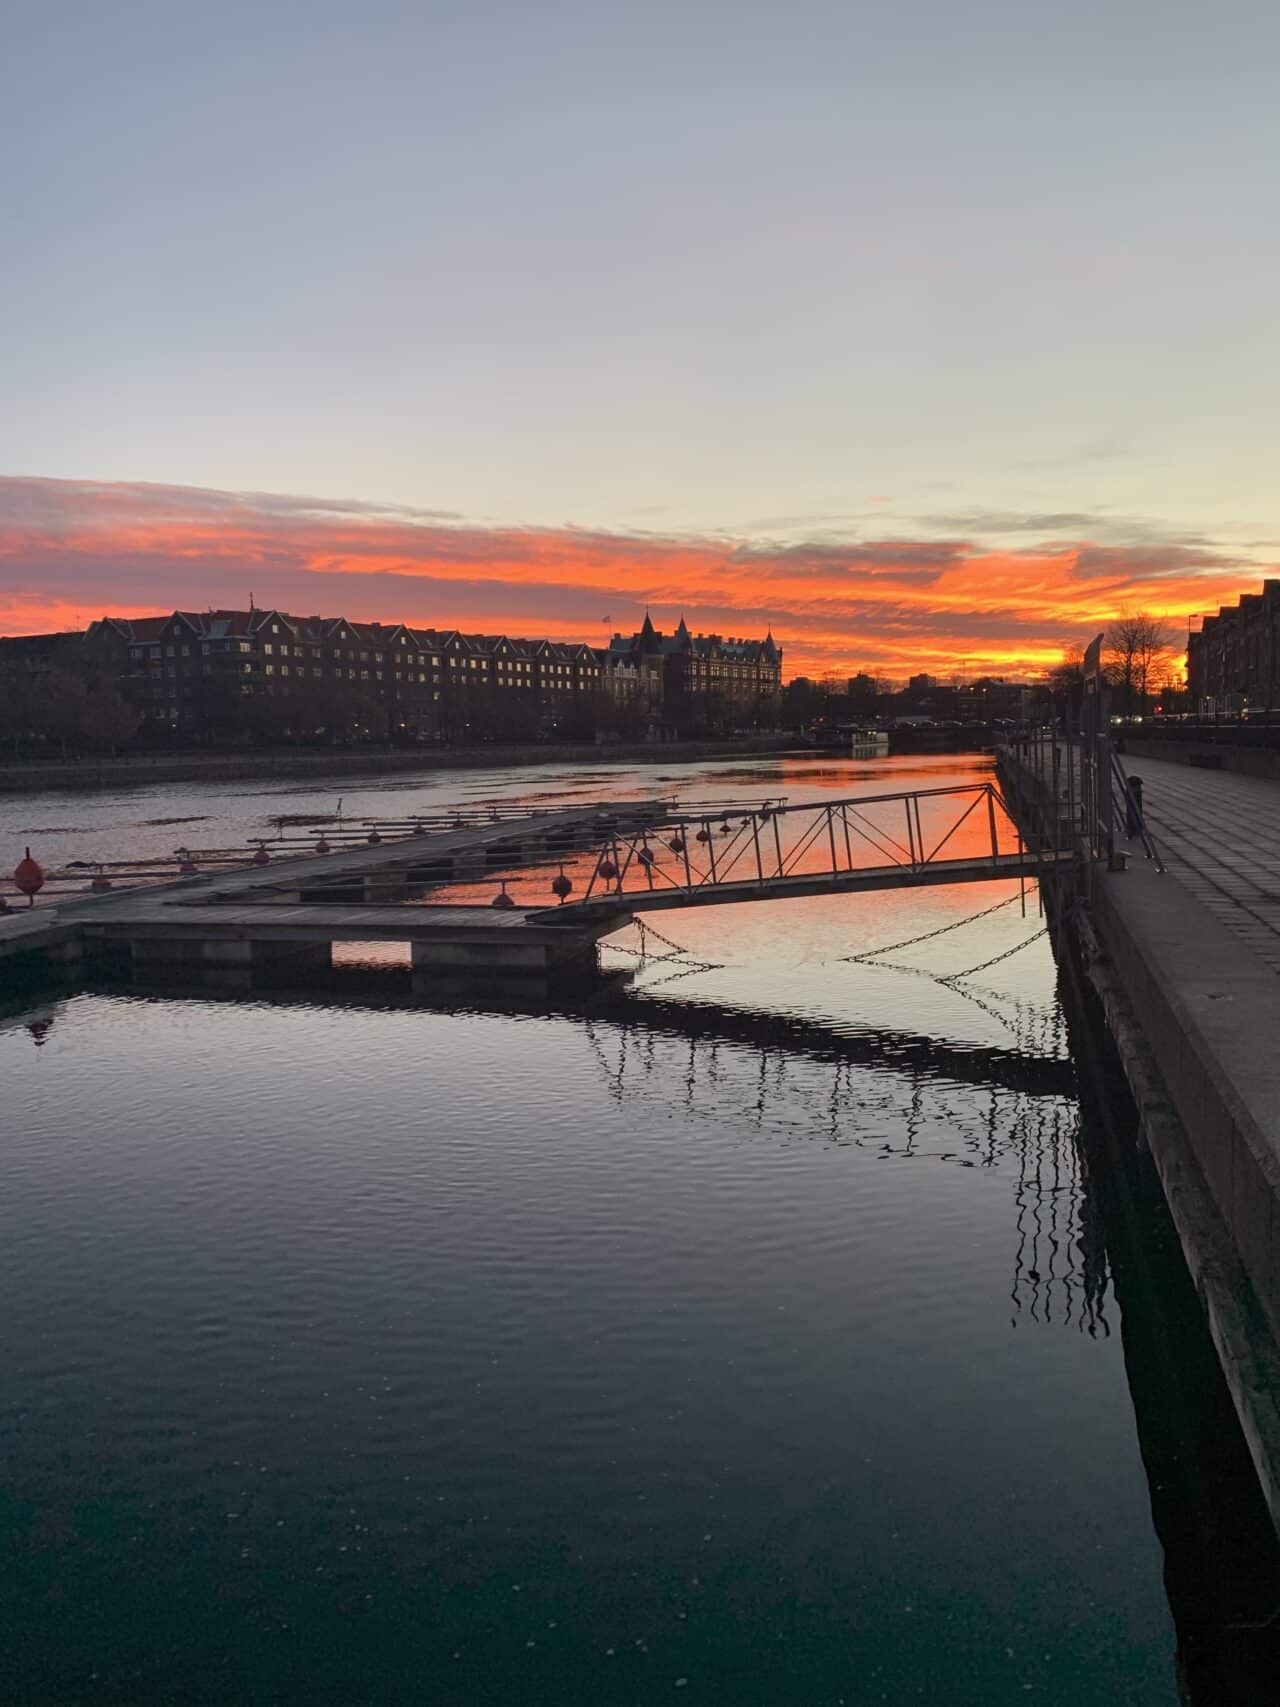 Dock Bridge In City River With Orange Sunset Sky